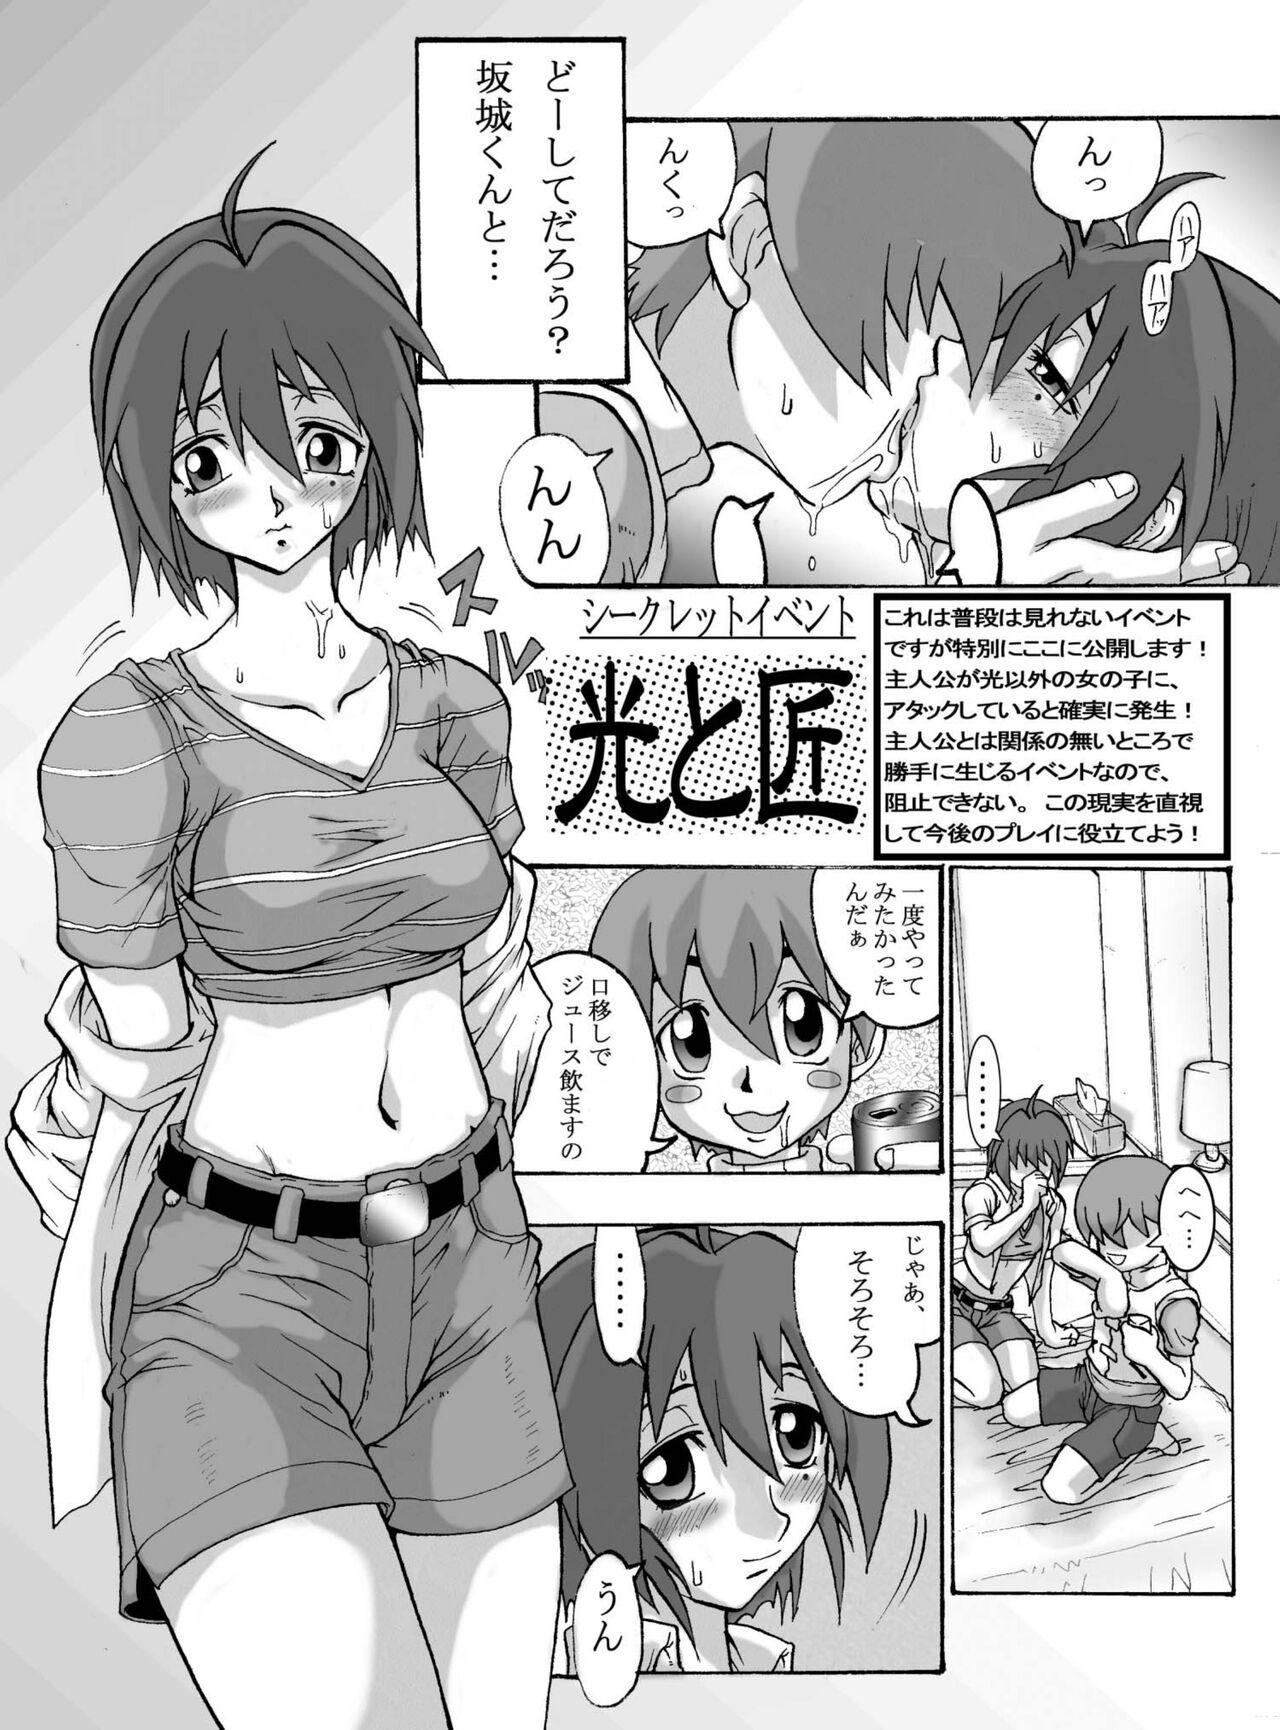 Stripping Comic Endorphin 6 APEND DISK - Tokimeki memorial Face Fuck - Page 4